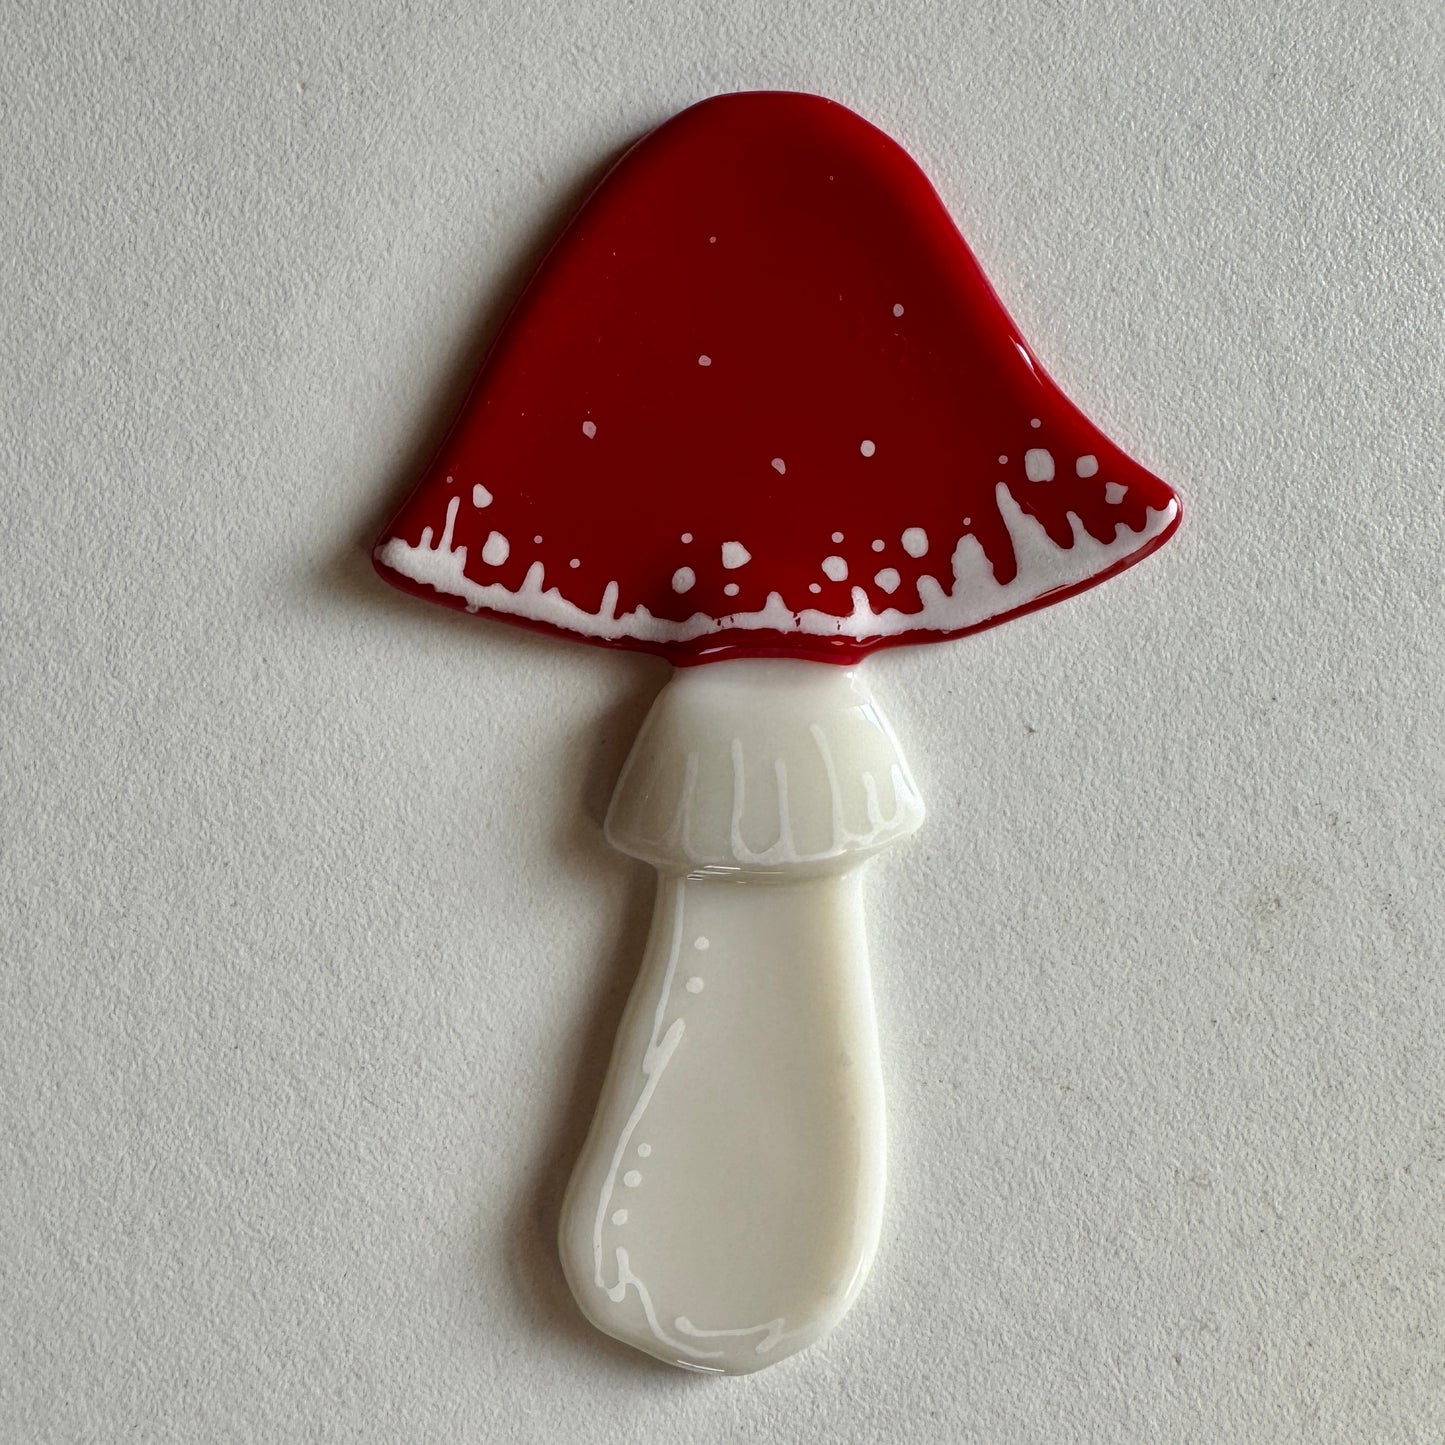 Mushroom Hanging Ornament